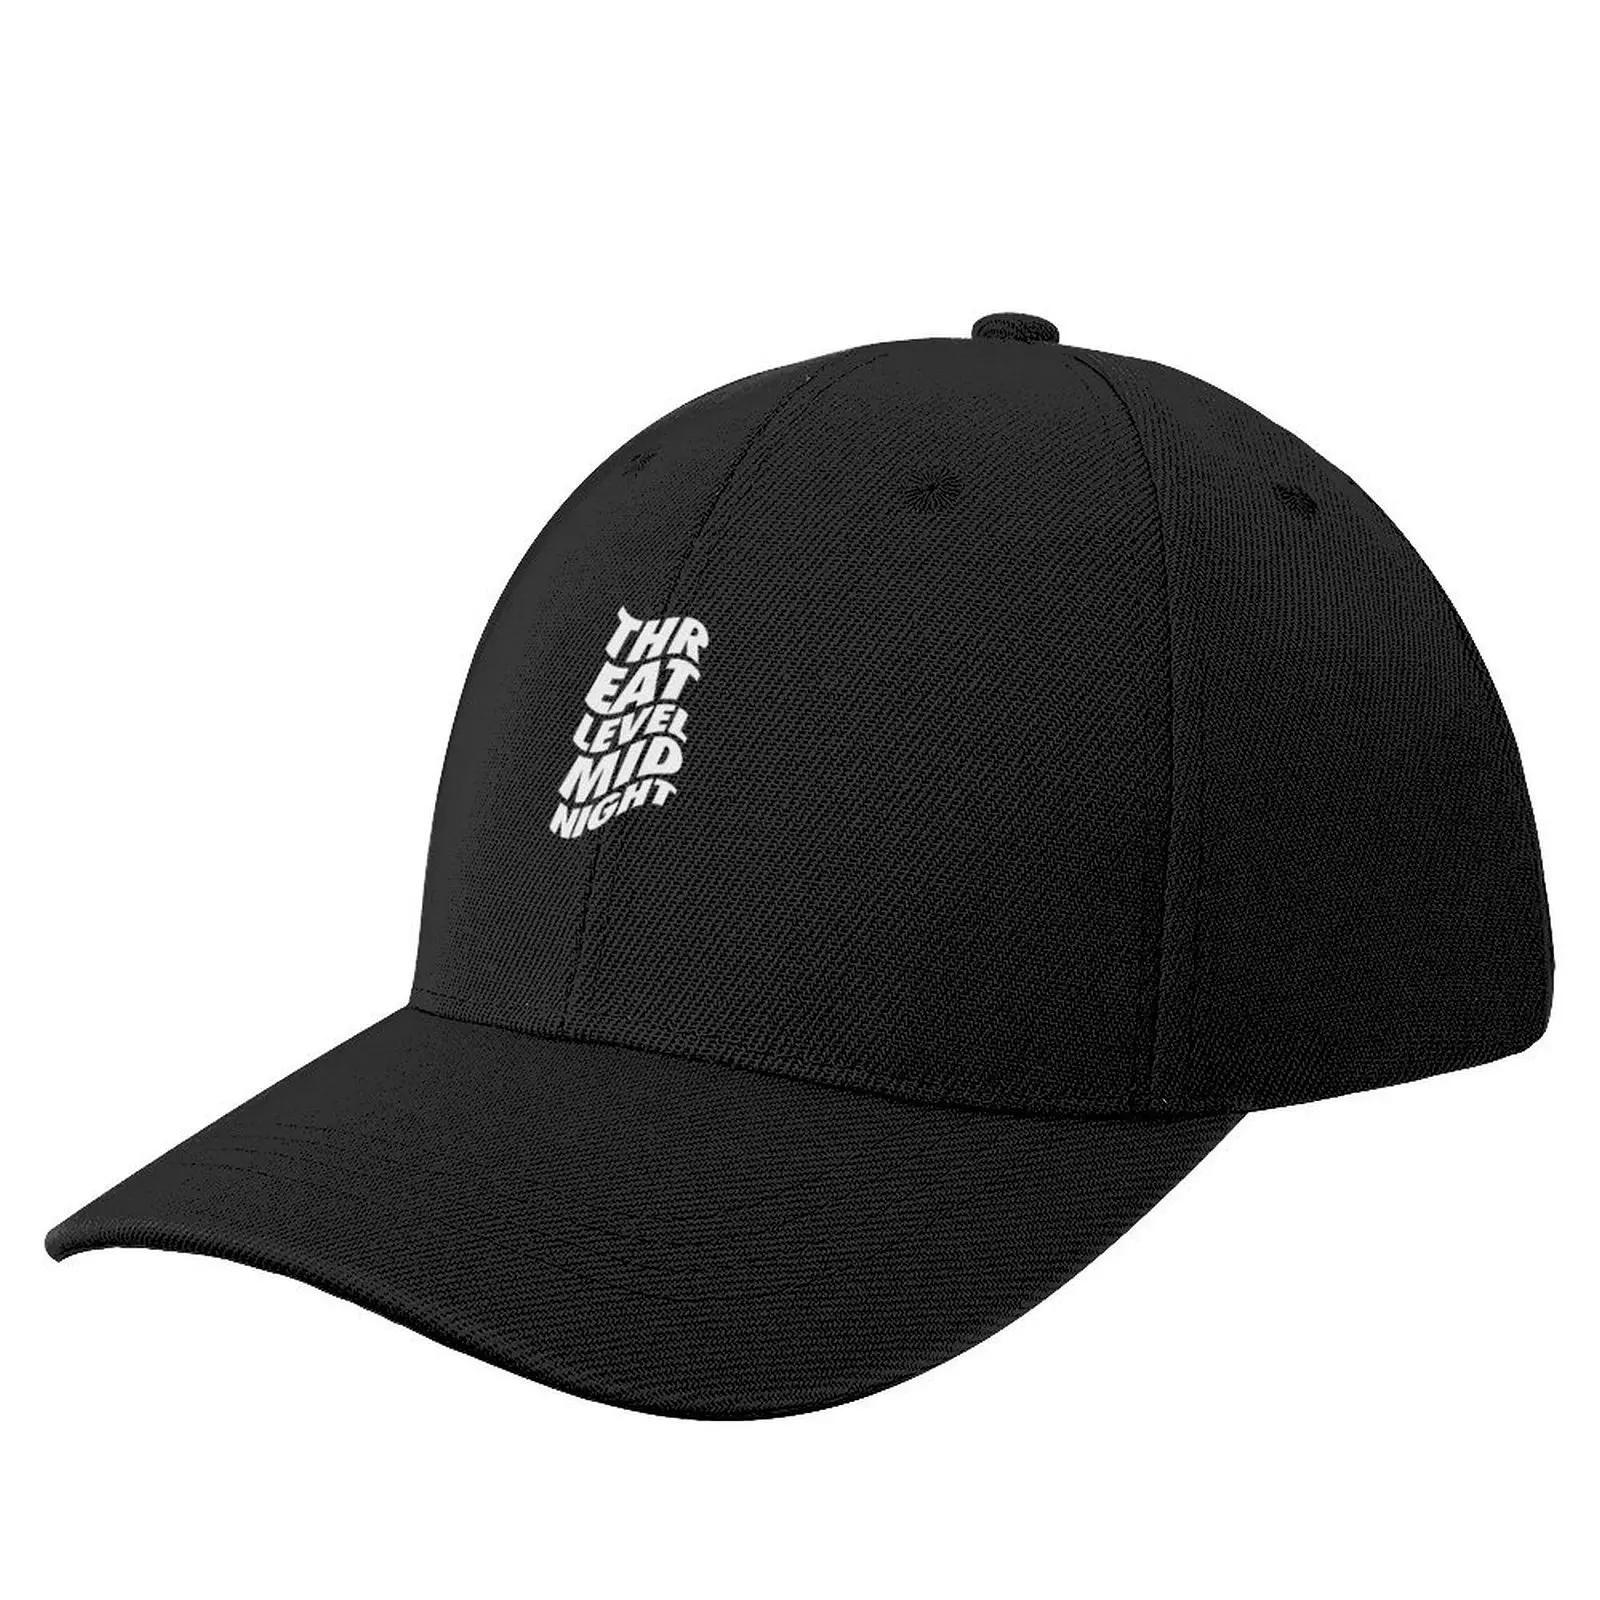 

Threat Level Midnight (White) Baseball Cap Golf Cap Sports Cap western Hat Trucker Hats For Men Women's